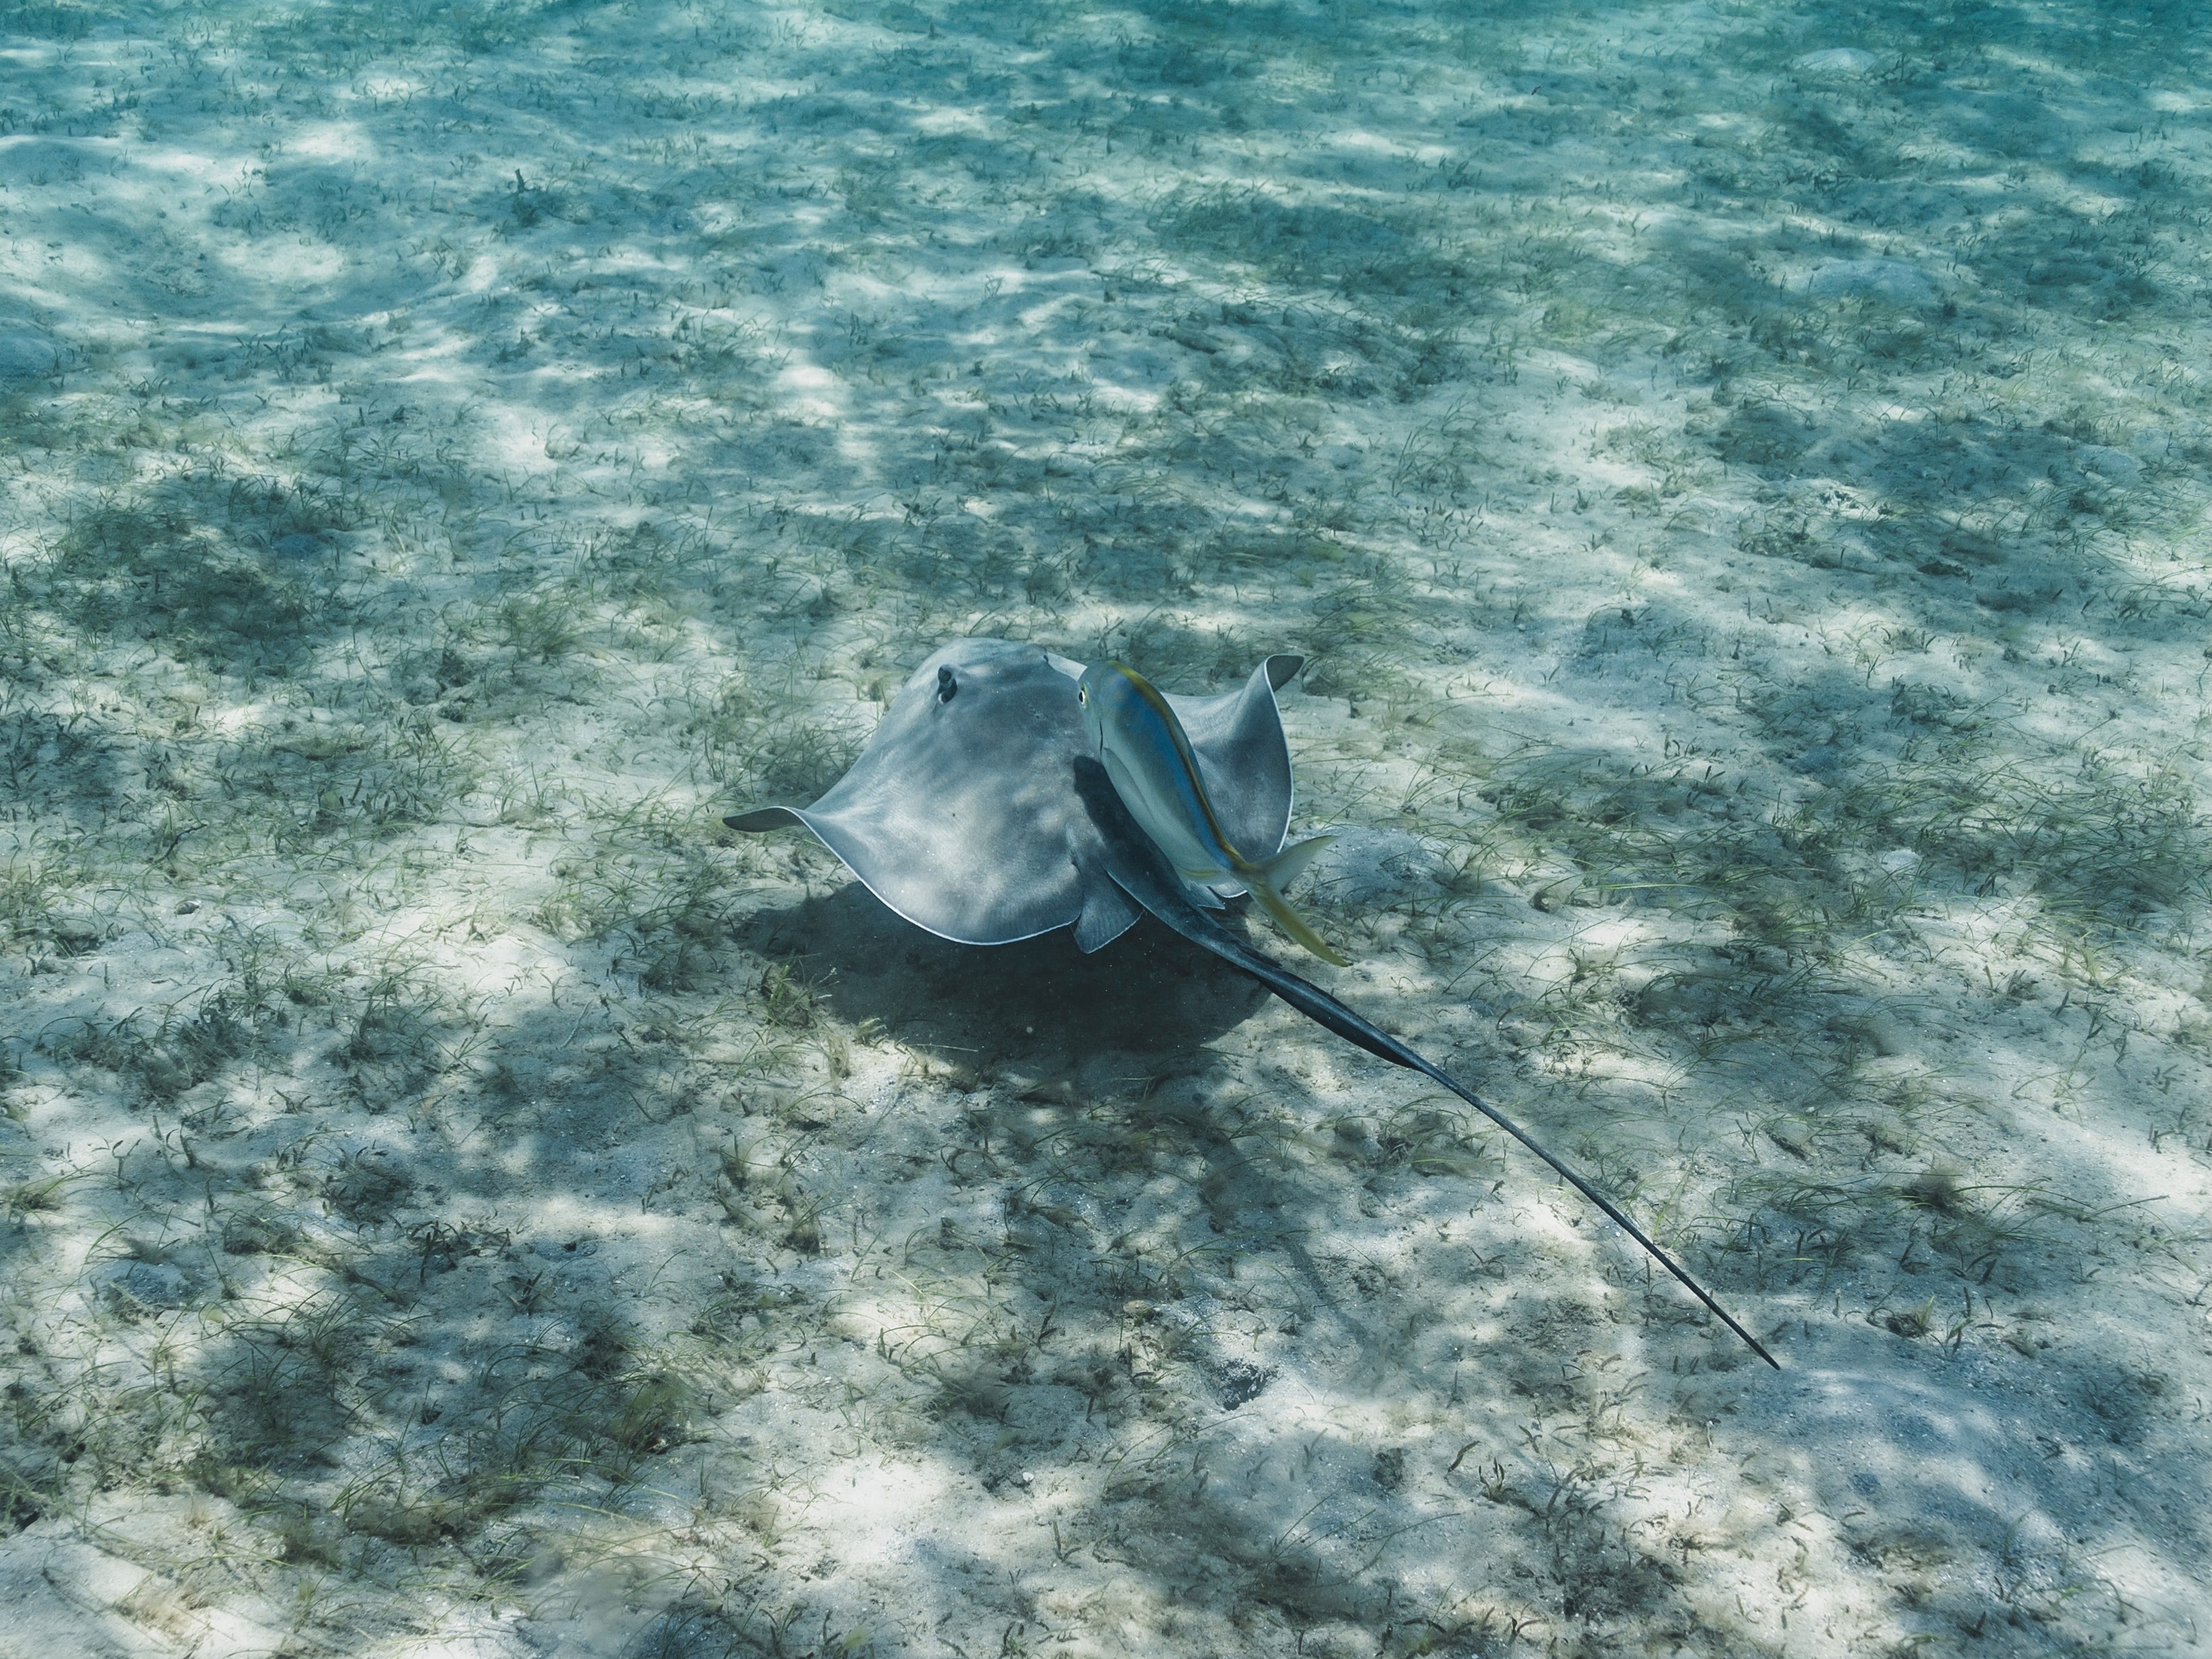 Stingray swimming along the sea floor